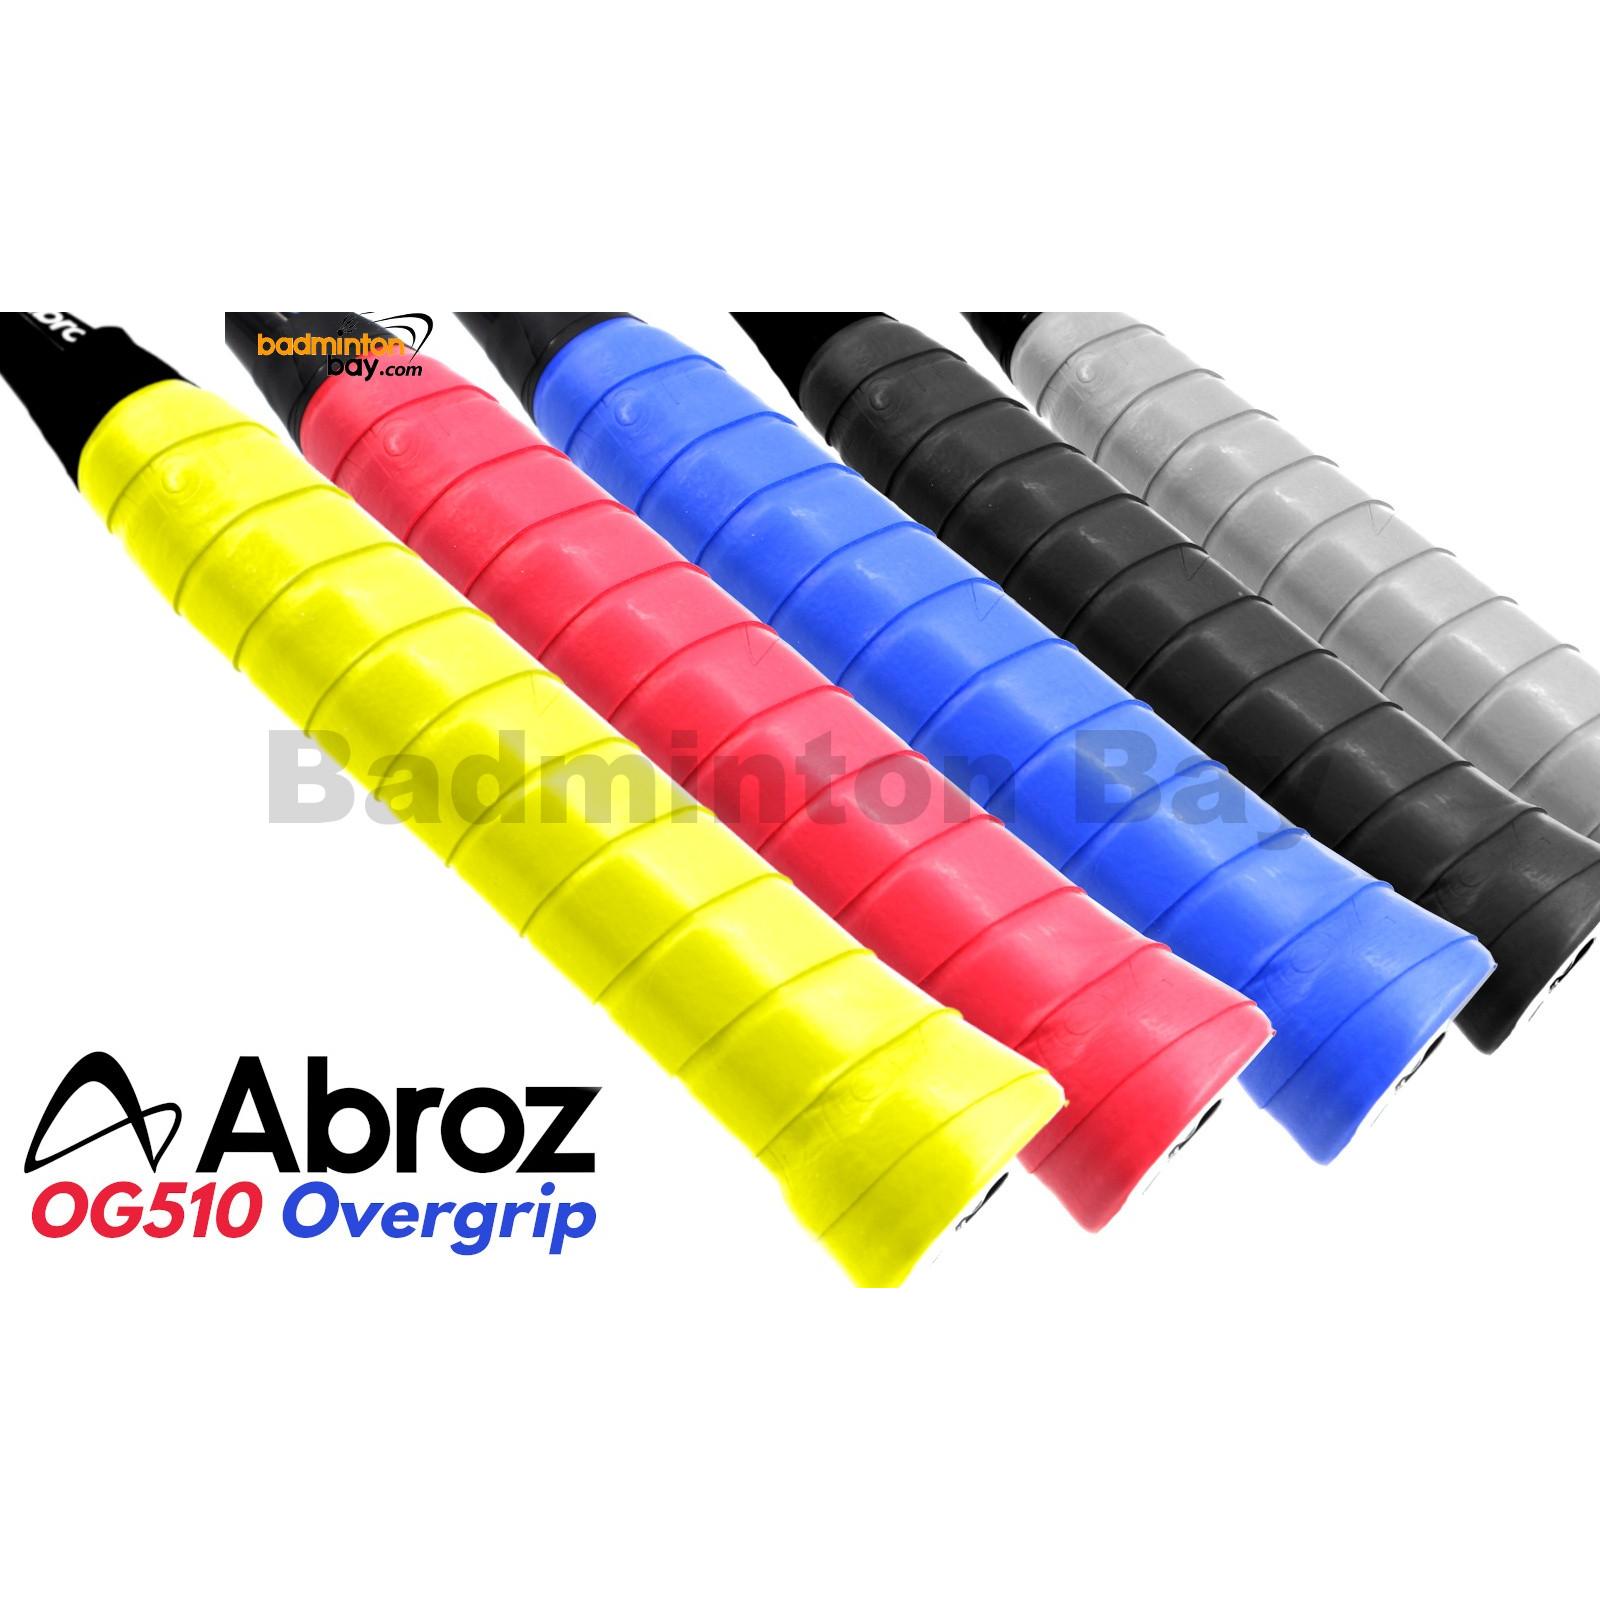 squash badminton 6er Pack grip strap Overgrip for tennis very grippyP0UK 